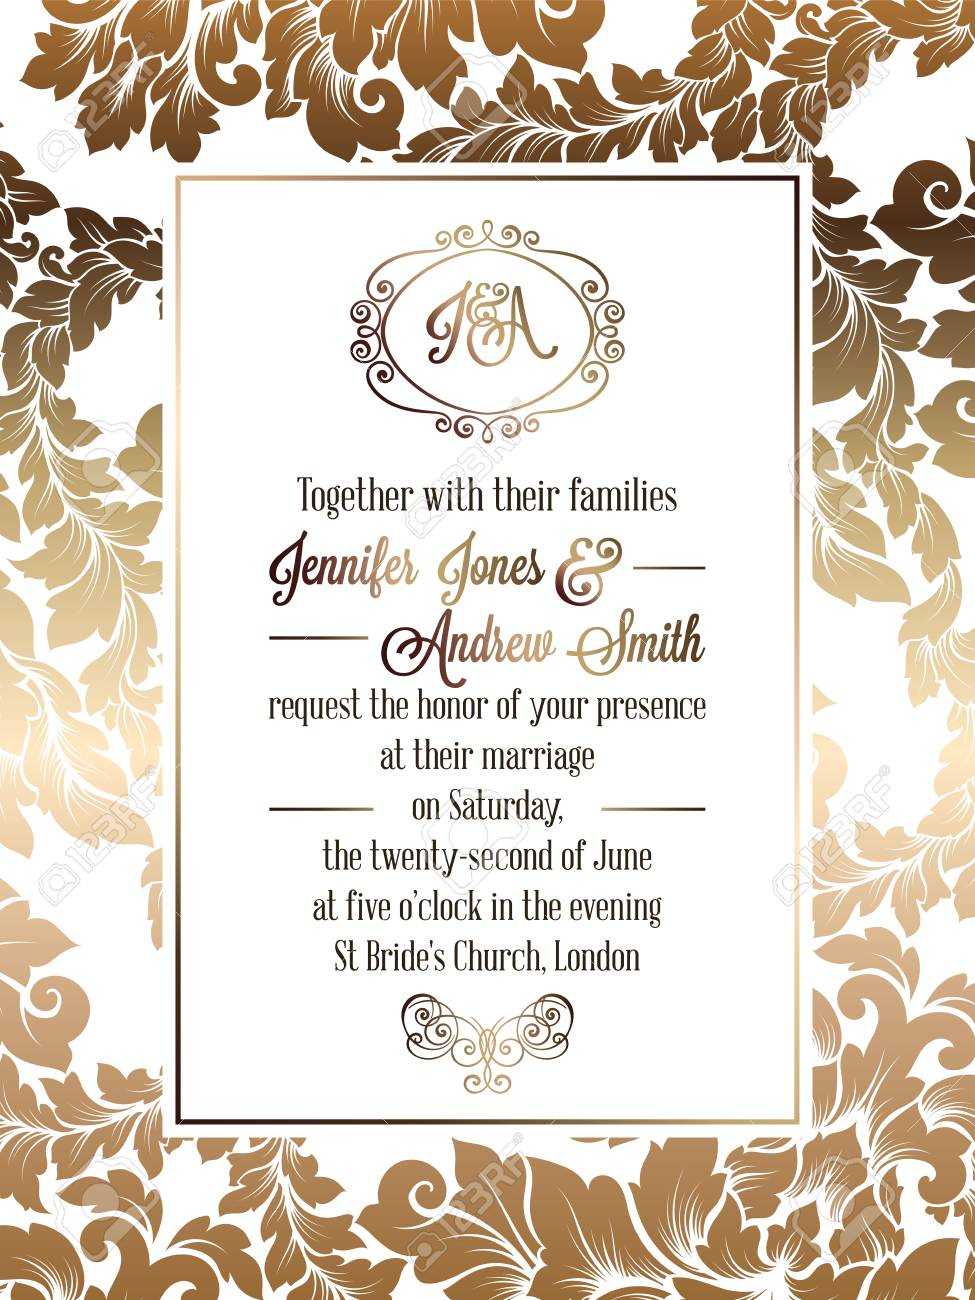 Vintage Baroque Style Wedding Invitation Card Template.. Elegant.. Inside Church Wedding Invitation Card Template